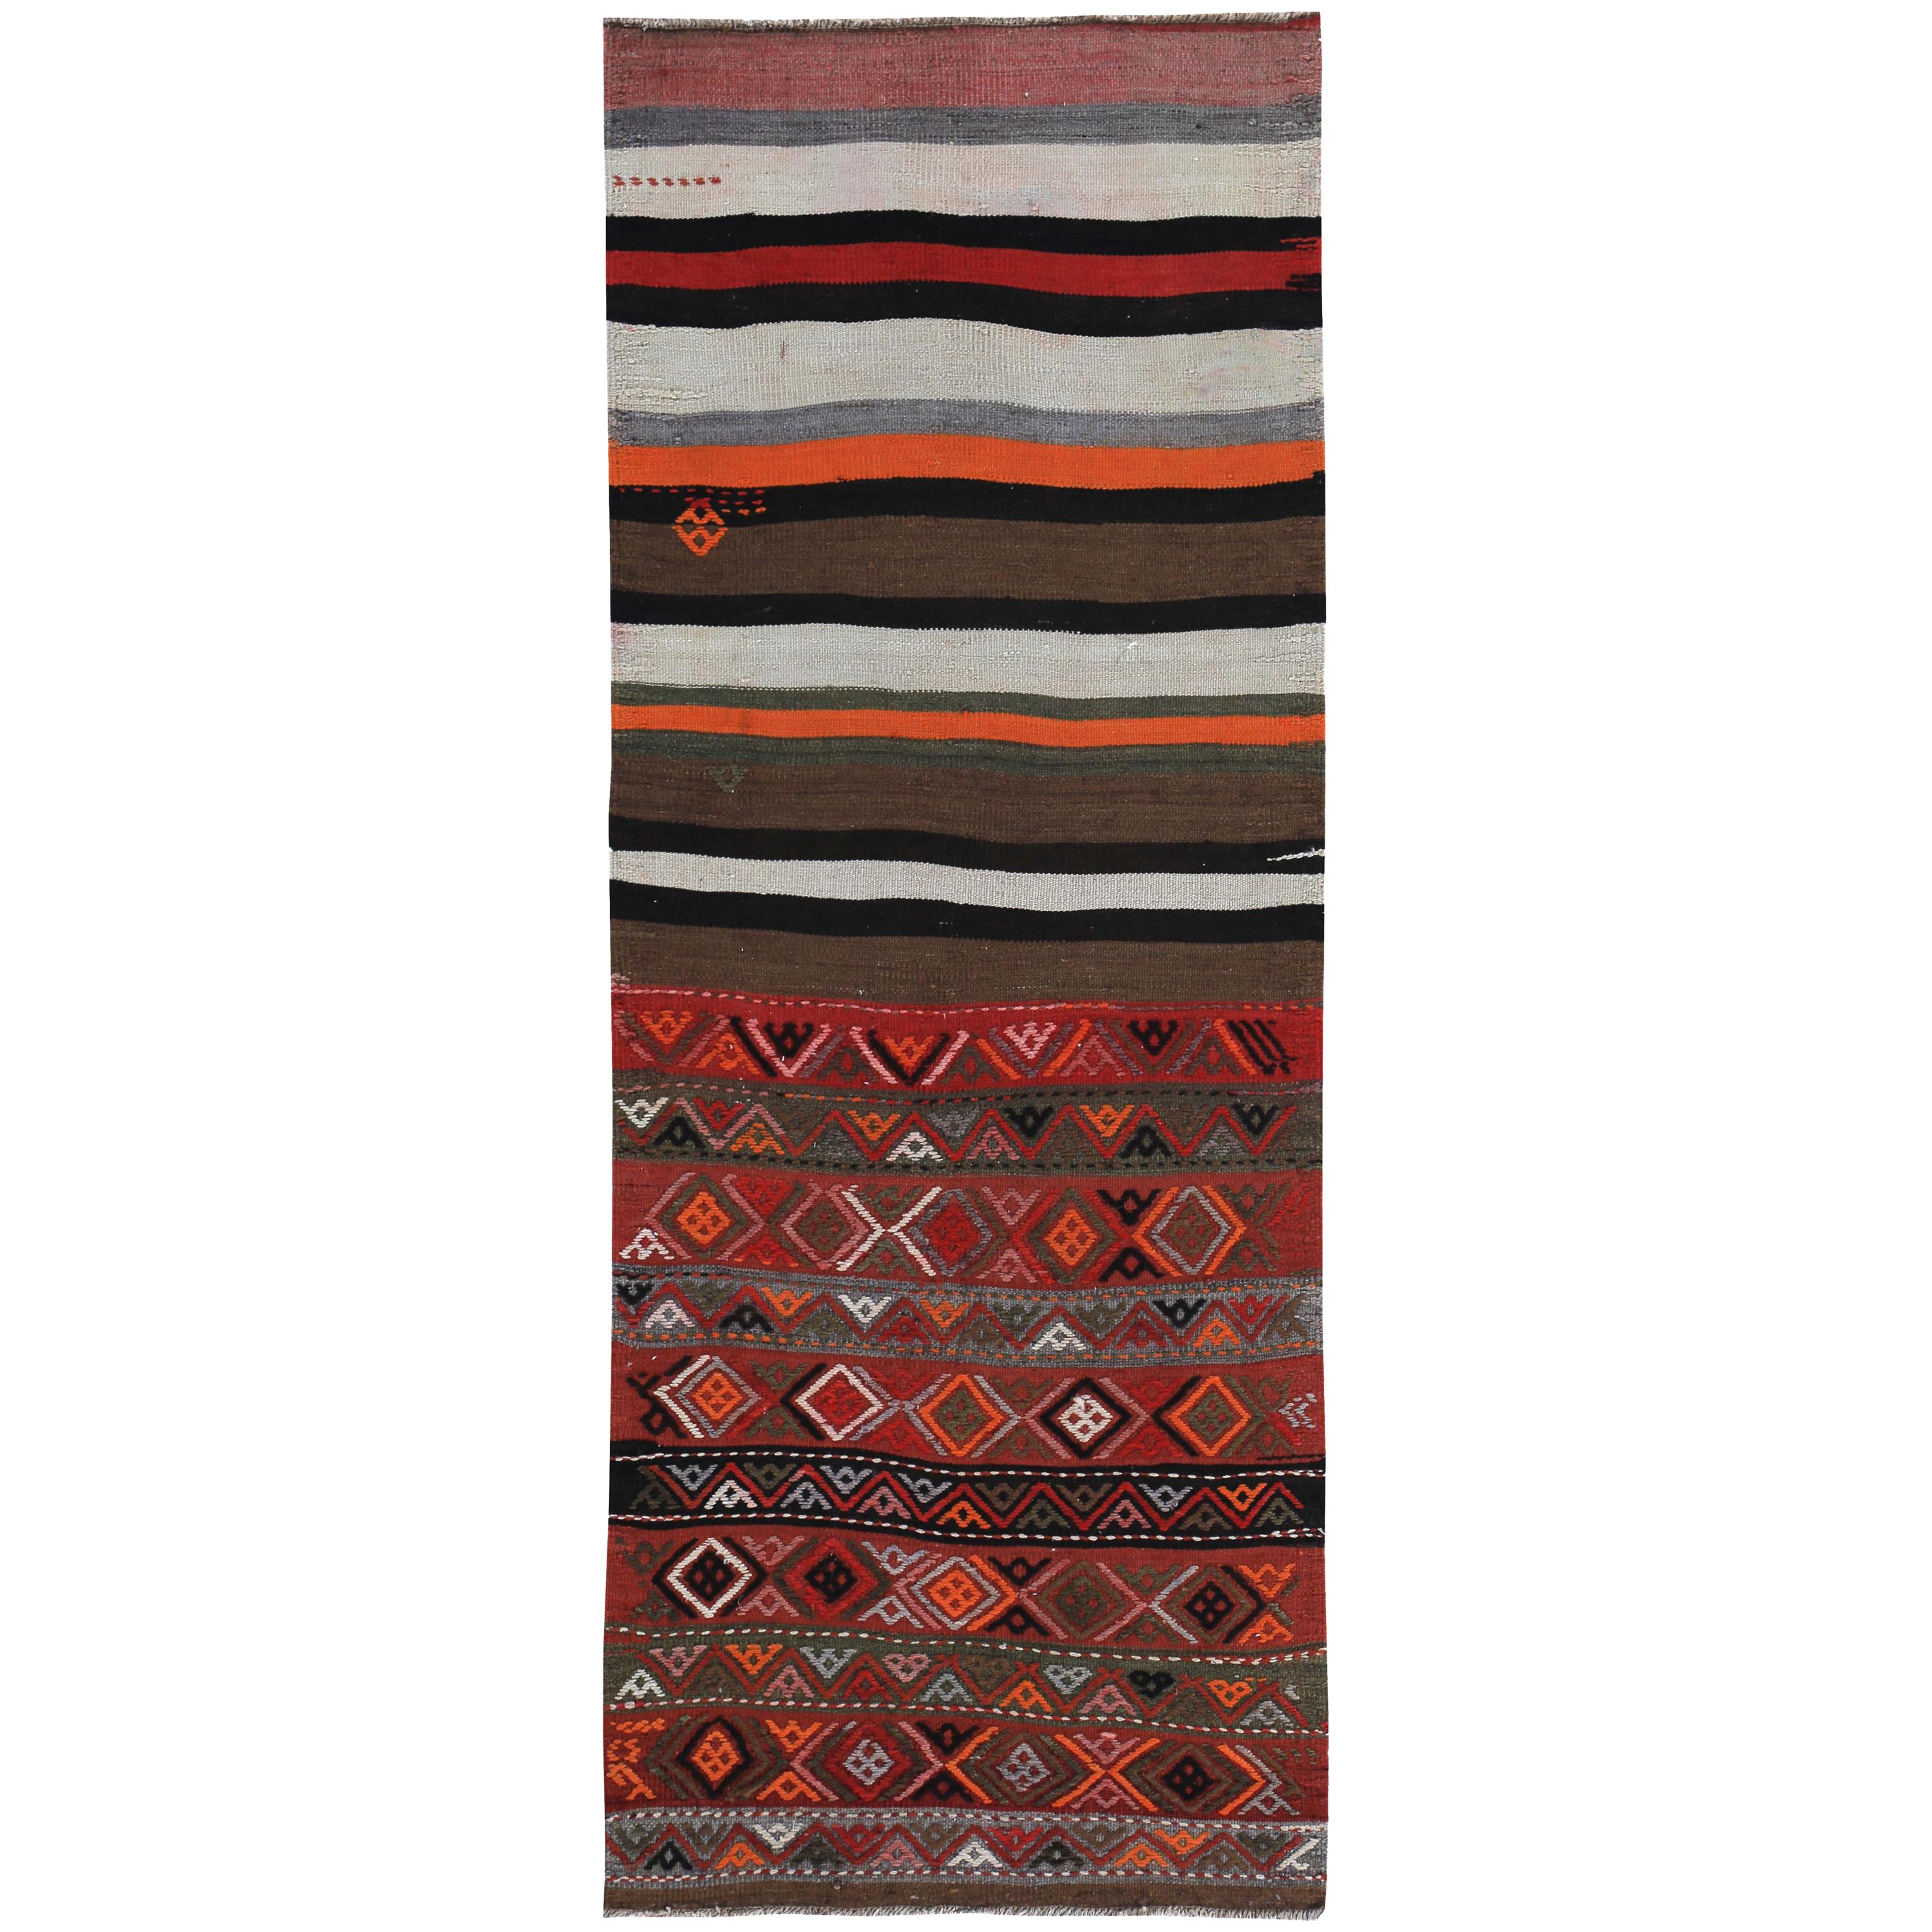 Turkish Kilim Runner Rug Stripes with Orange, Blue, Red & Black Tribal Diamonds For Sale